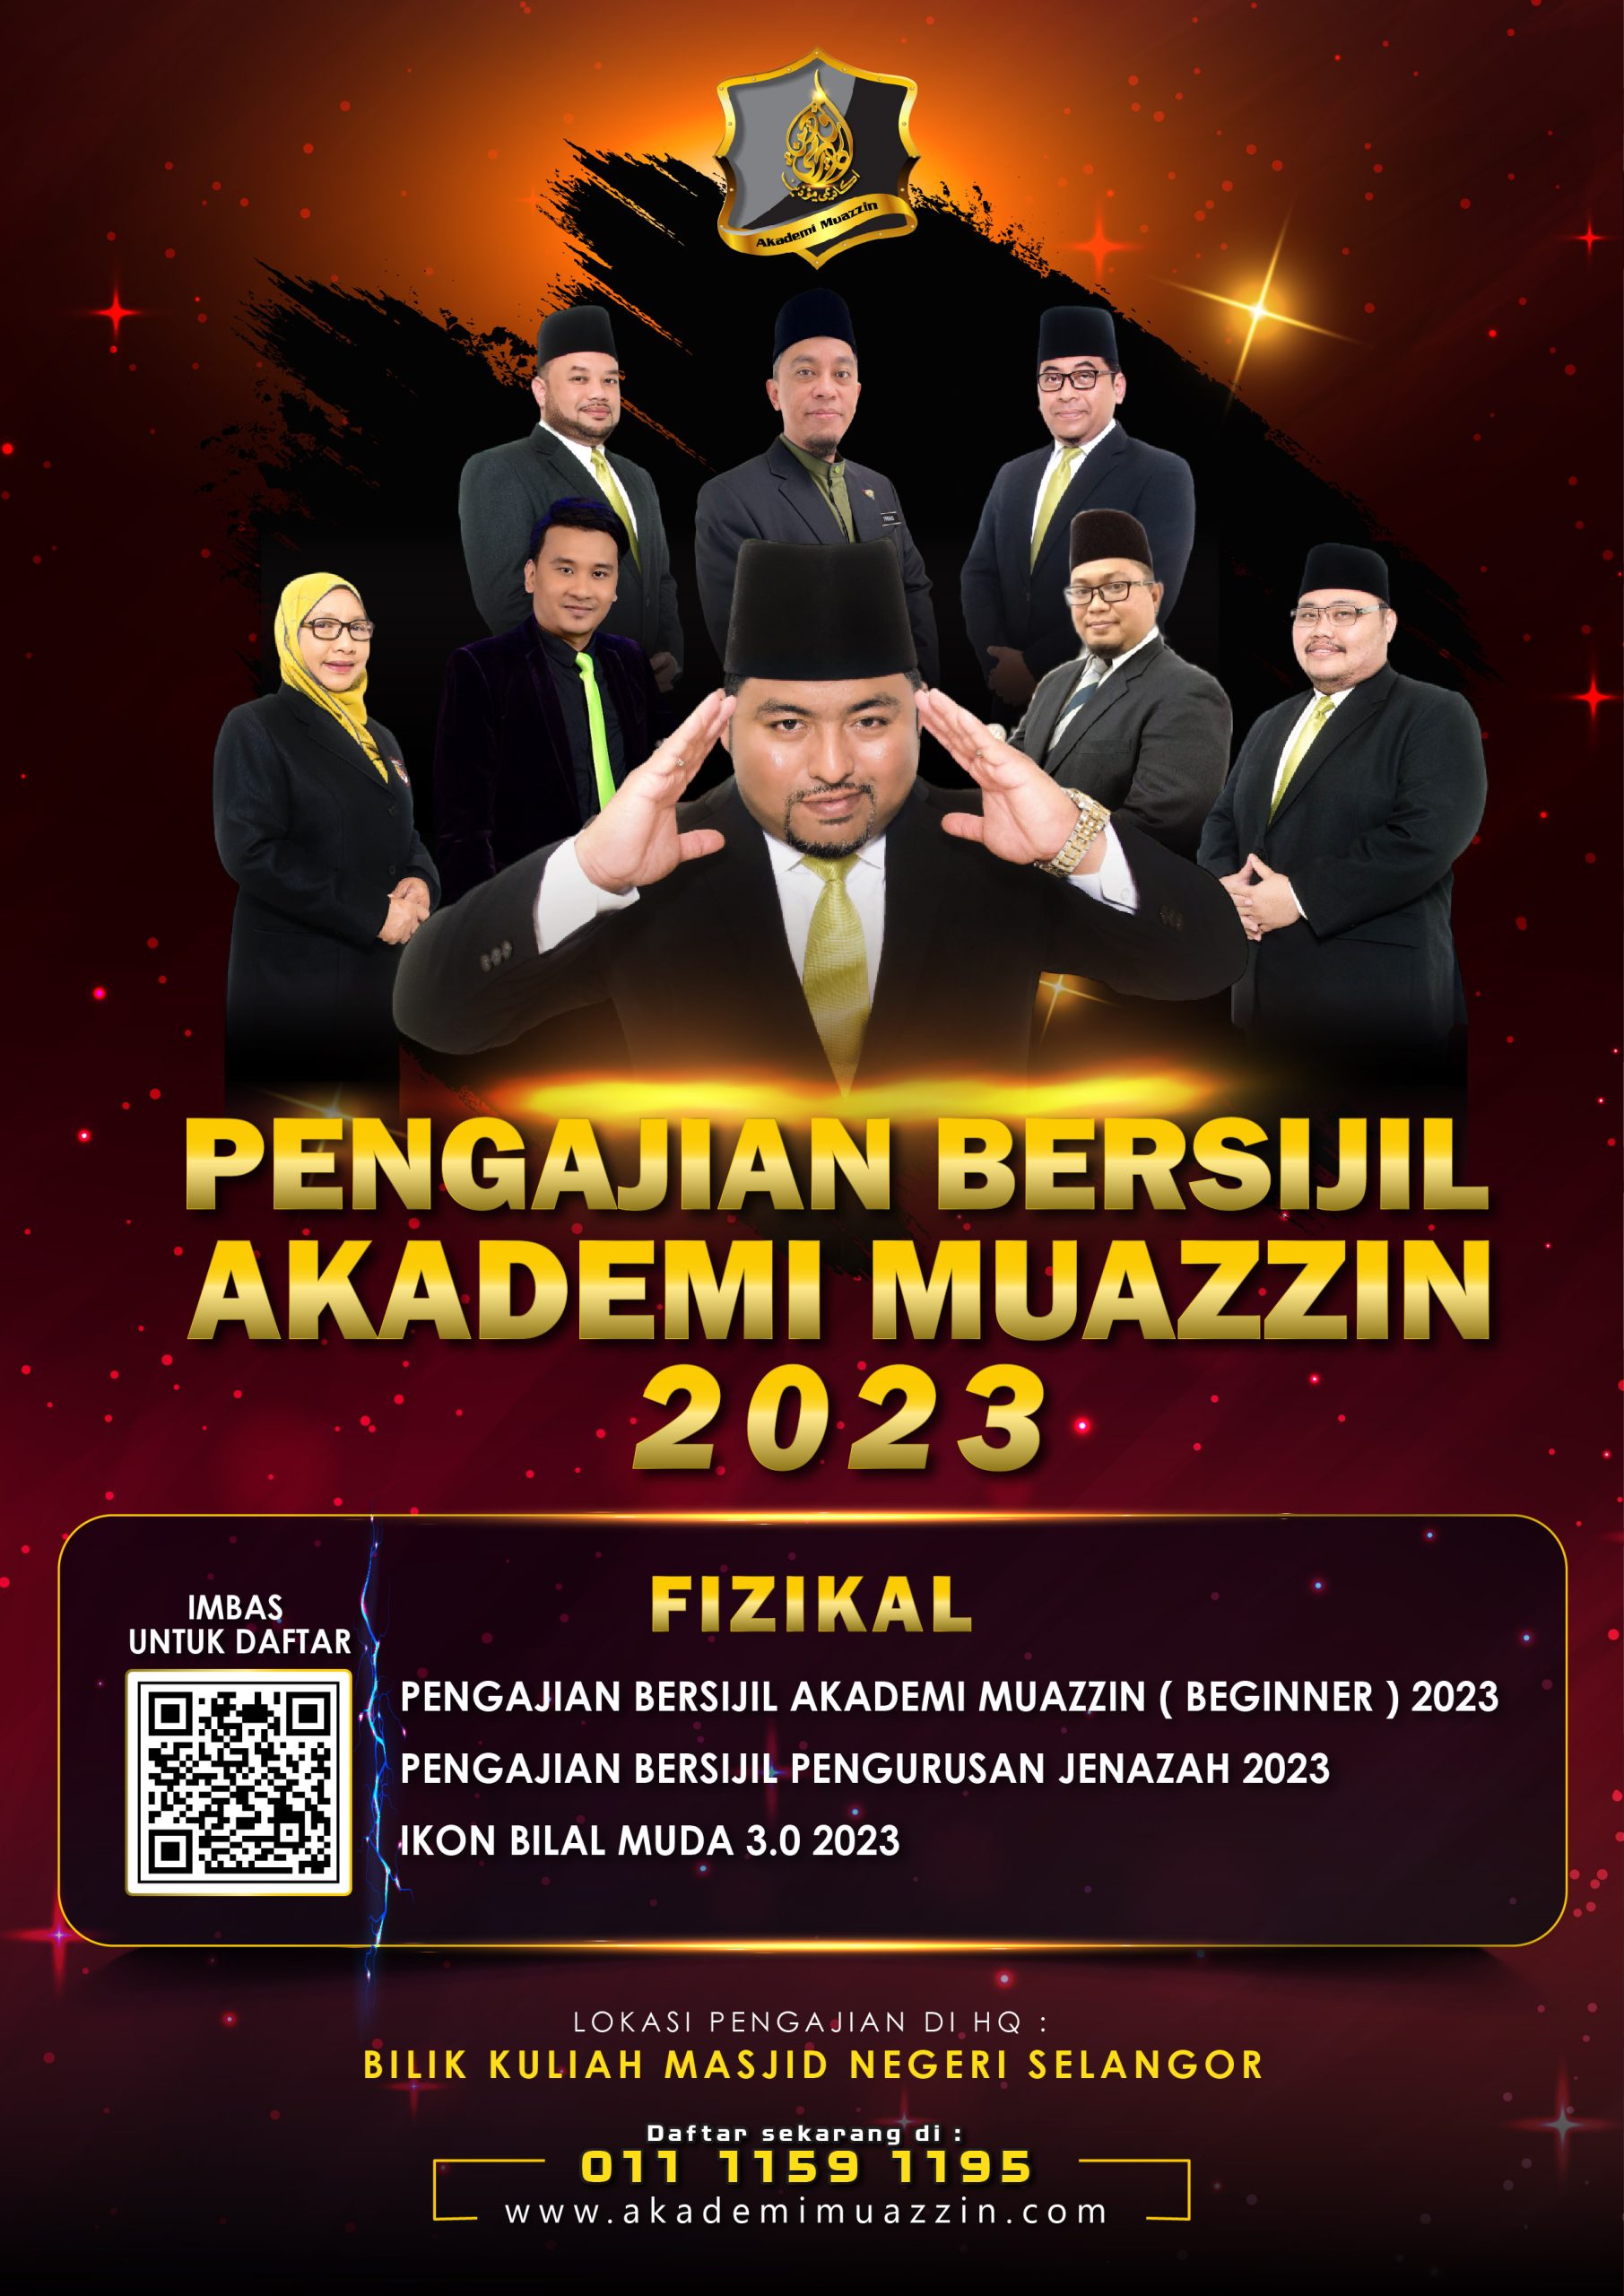 Pengajian Bersijil Akademi Muazzin 2023-02